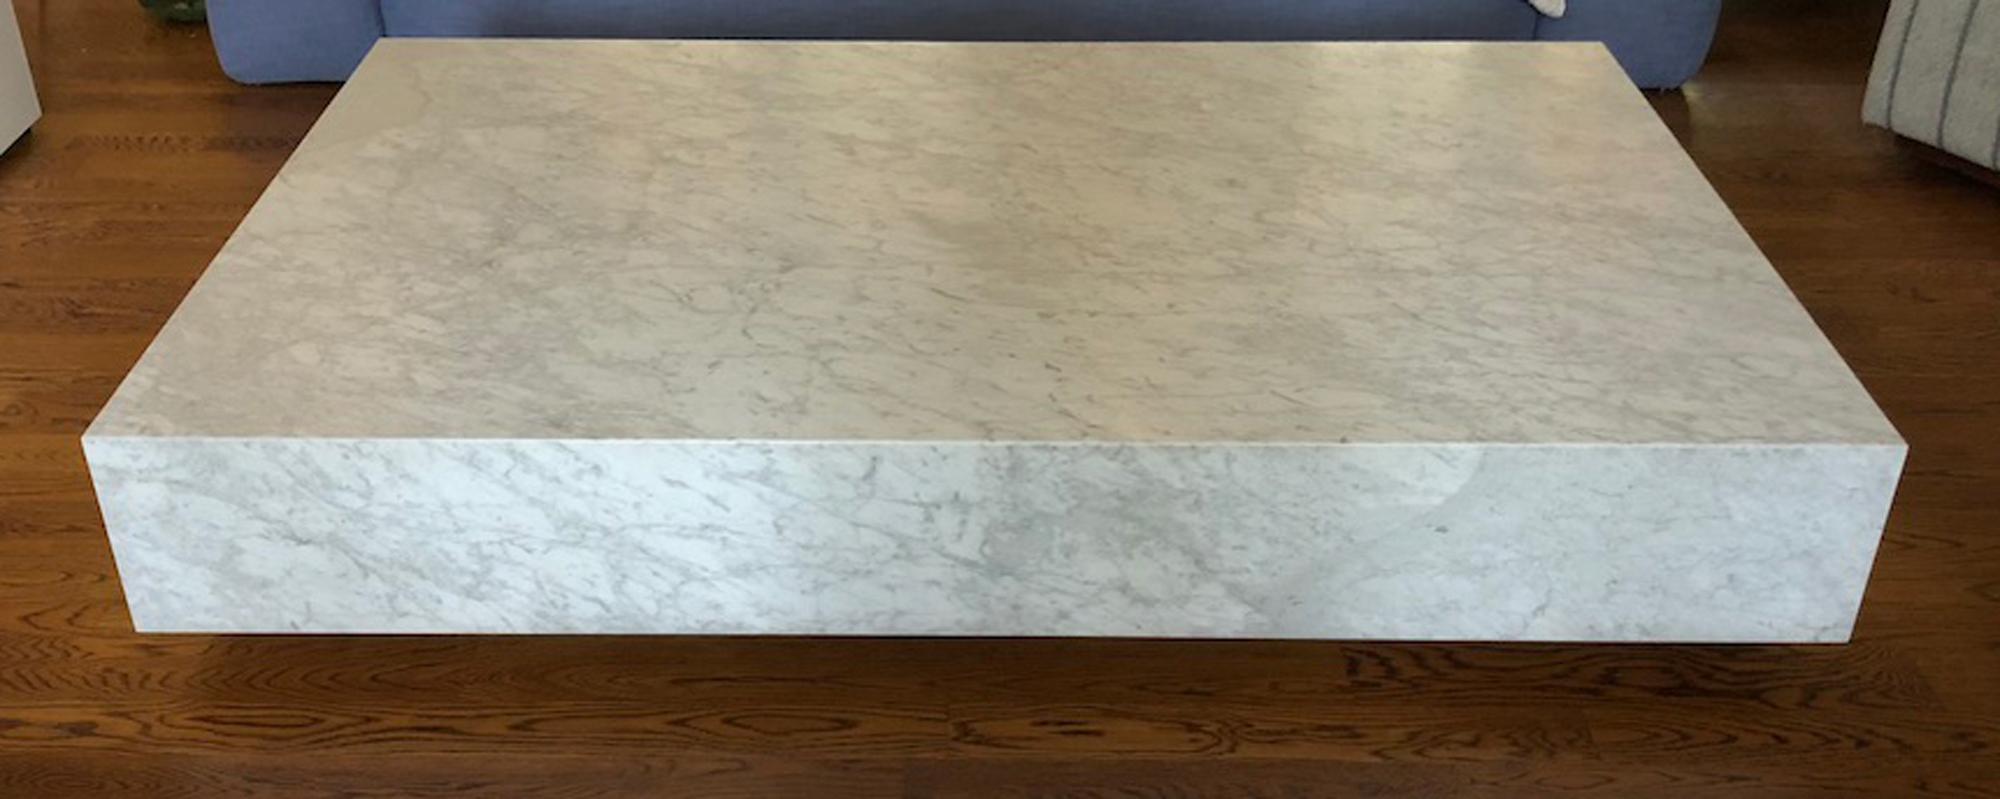 marble coffee table plinth